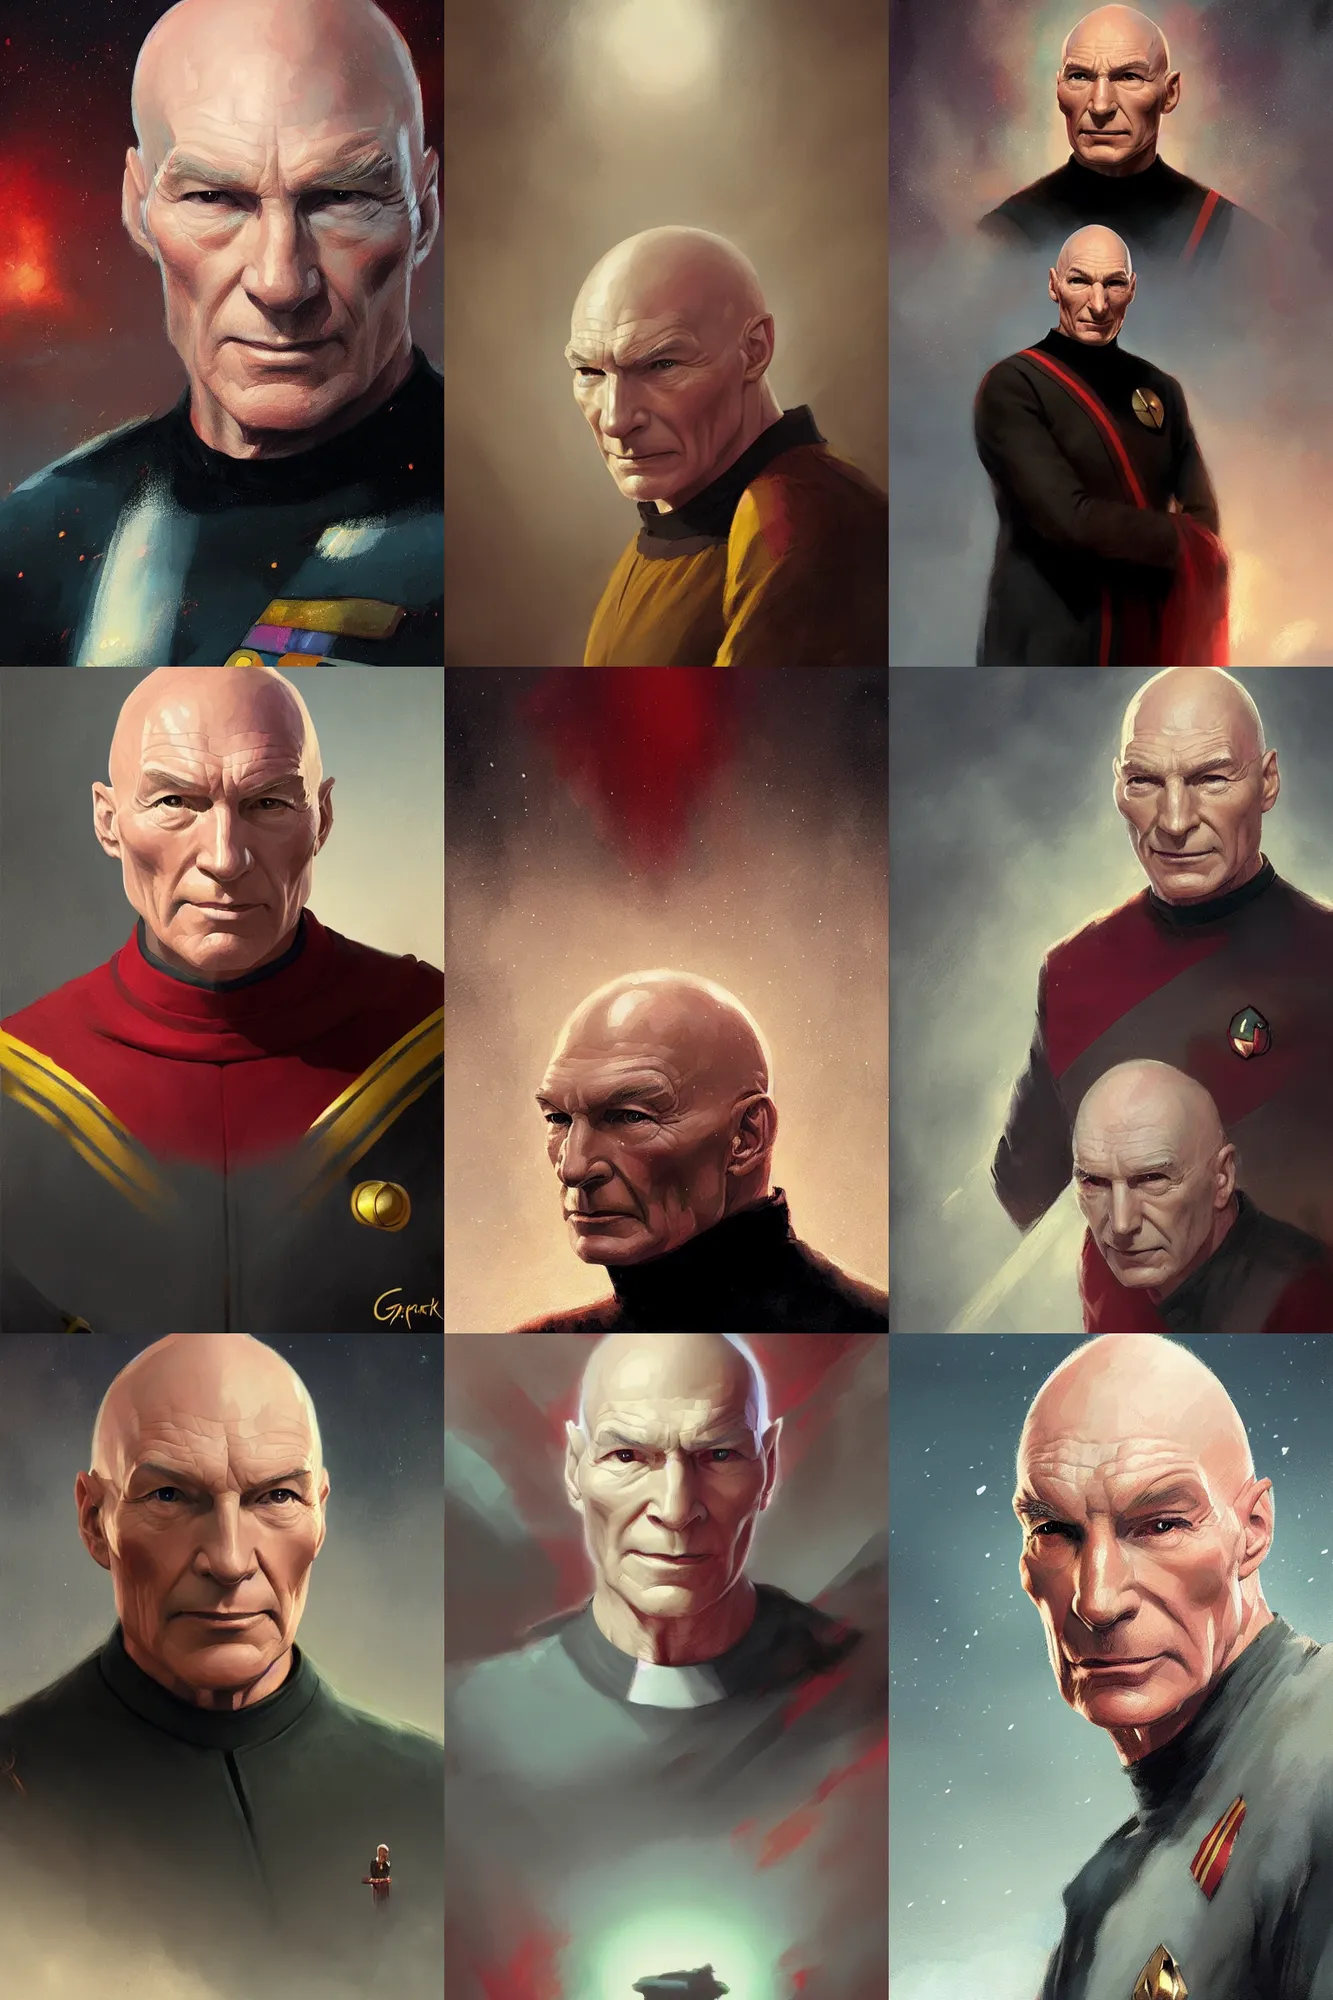 Prompt: portrait of Captain Picard, by Greg rutkowski, Trending artstation, cinematográfica, digital Art